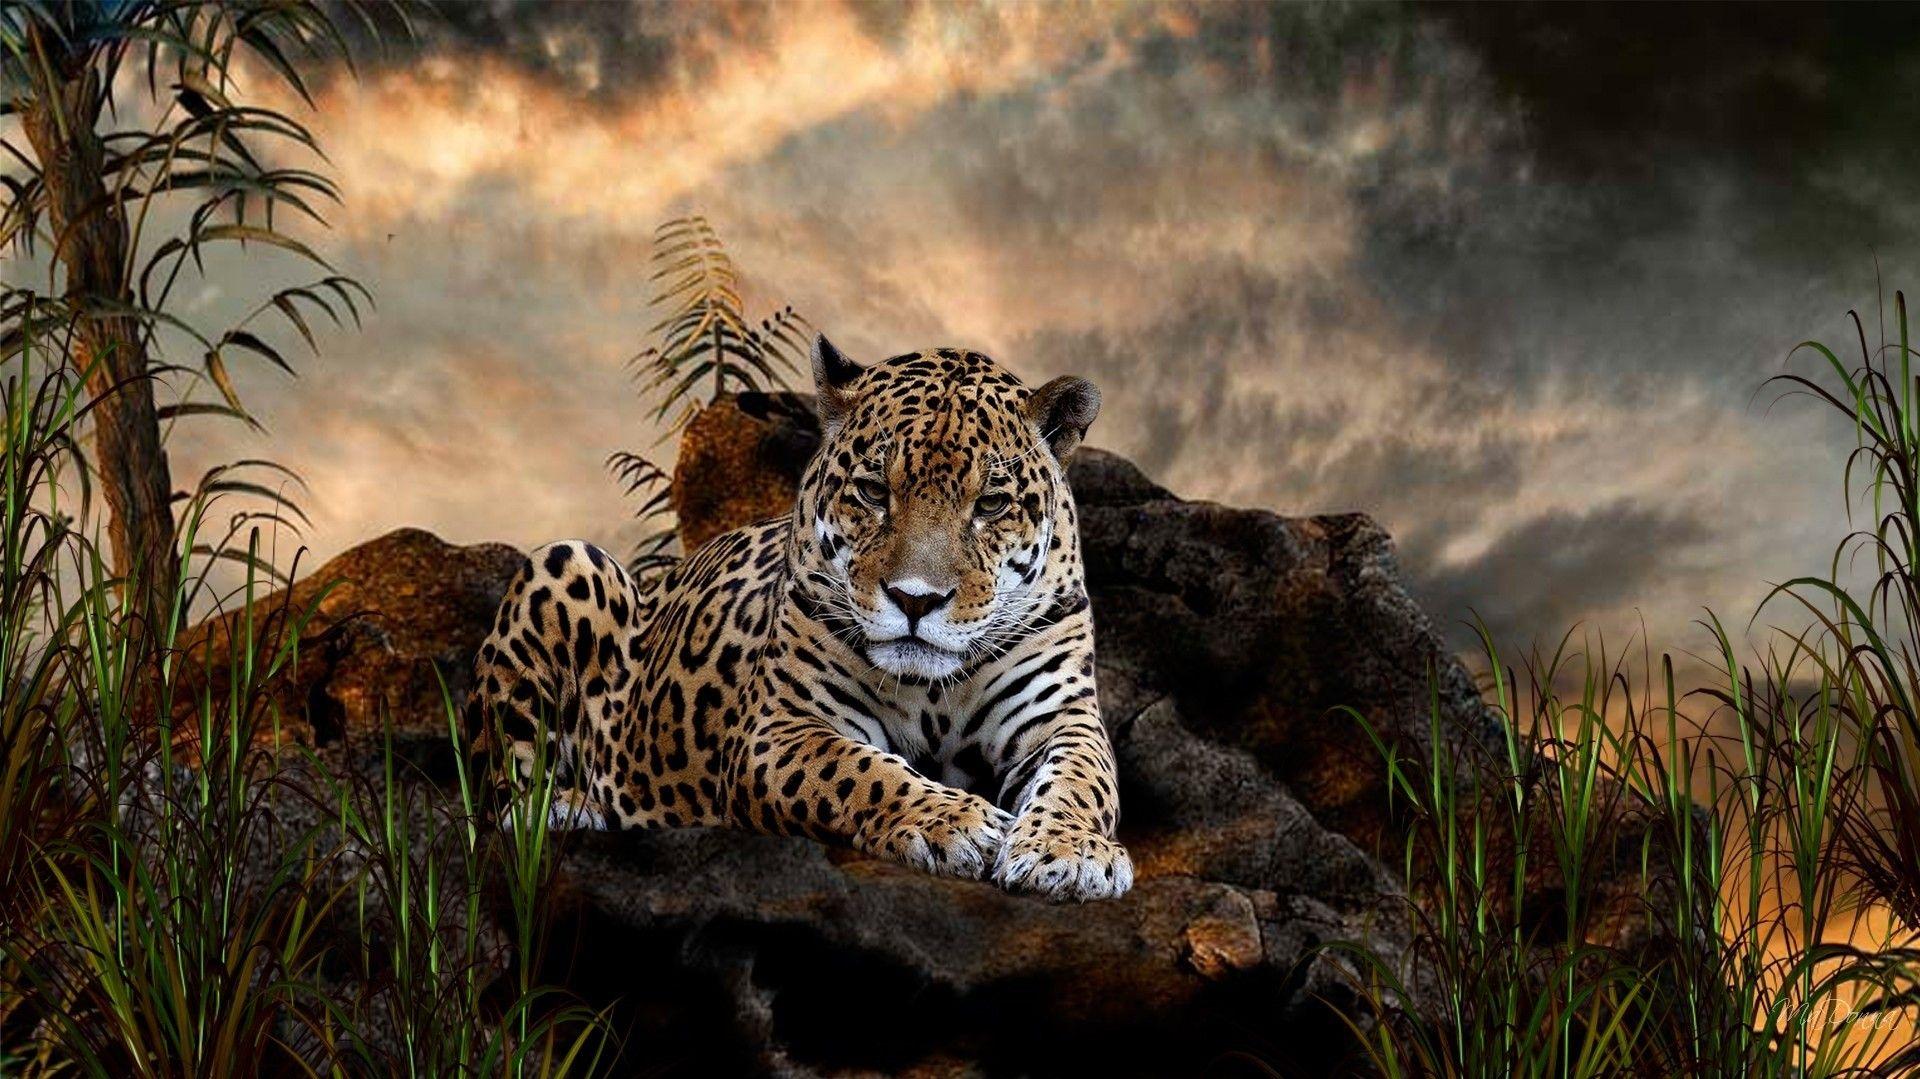 Jaguar 1080p HD Wallpaper Animal Wild